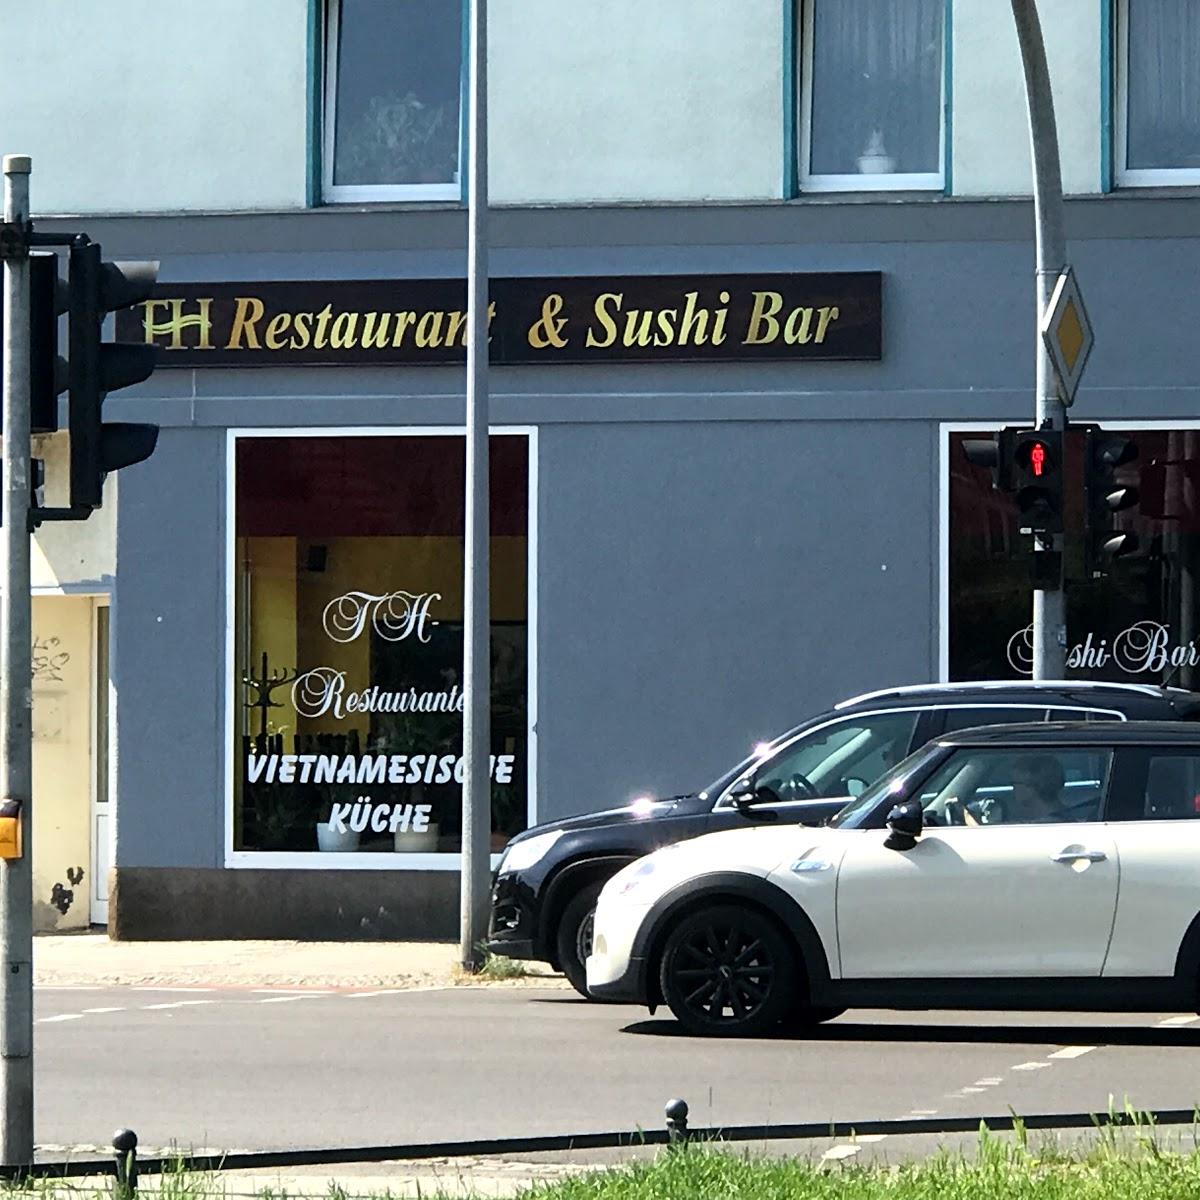 Restaurant "TH Restaurant & Sushi Bar" in Rathenow